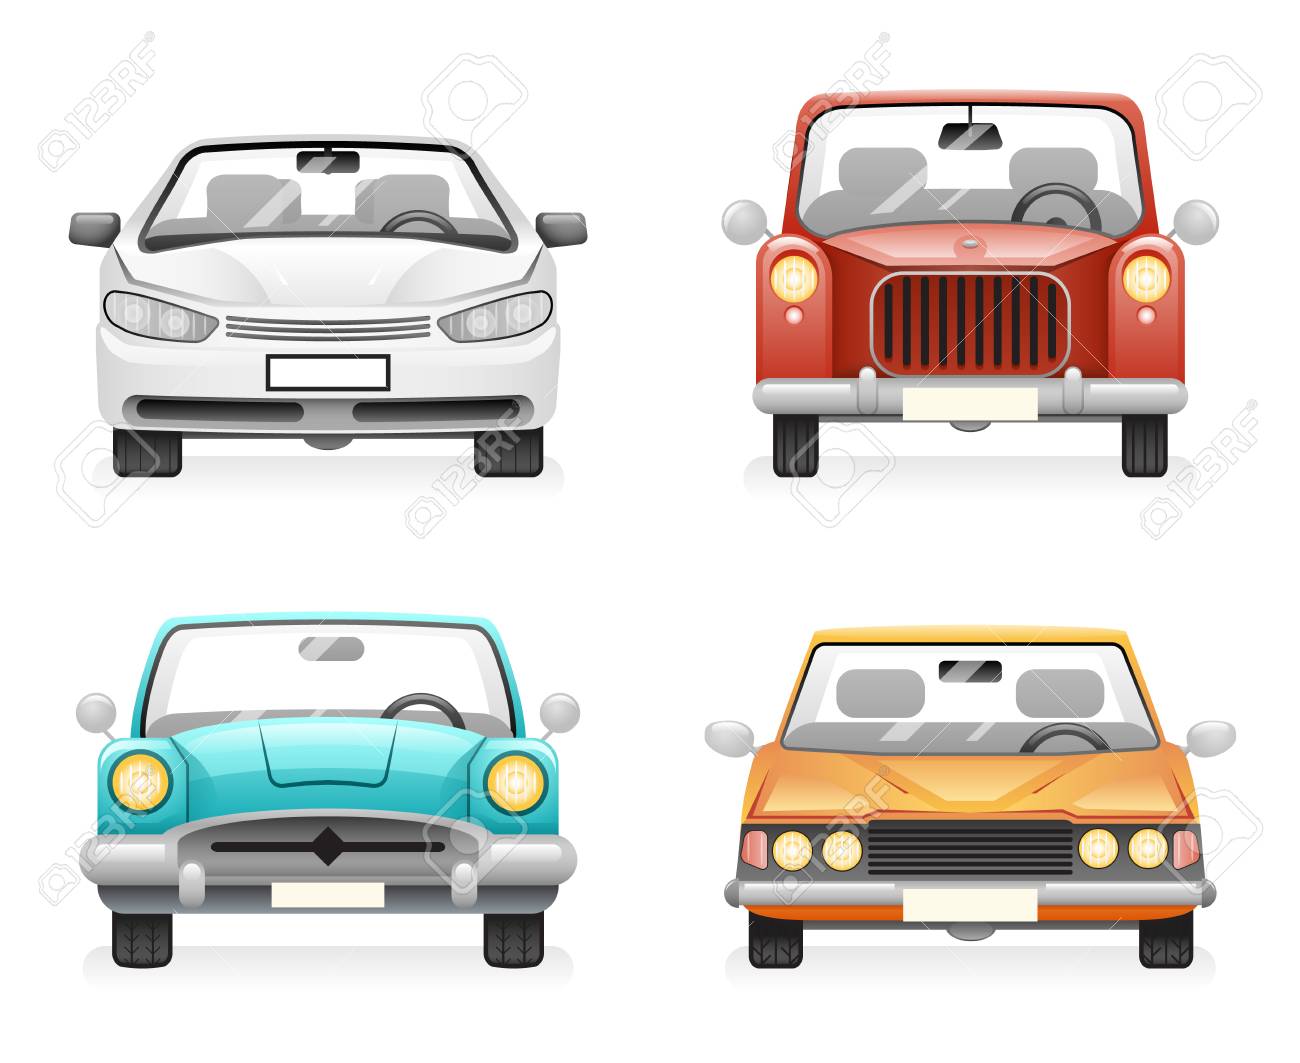 78347764-vista-frontal-retro-coche-moderno-icons-set-aislado-diseño-transporte-clipart-cliparts-vector-illustrat.jpg